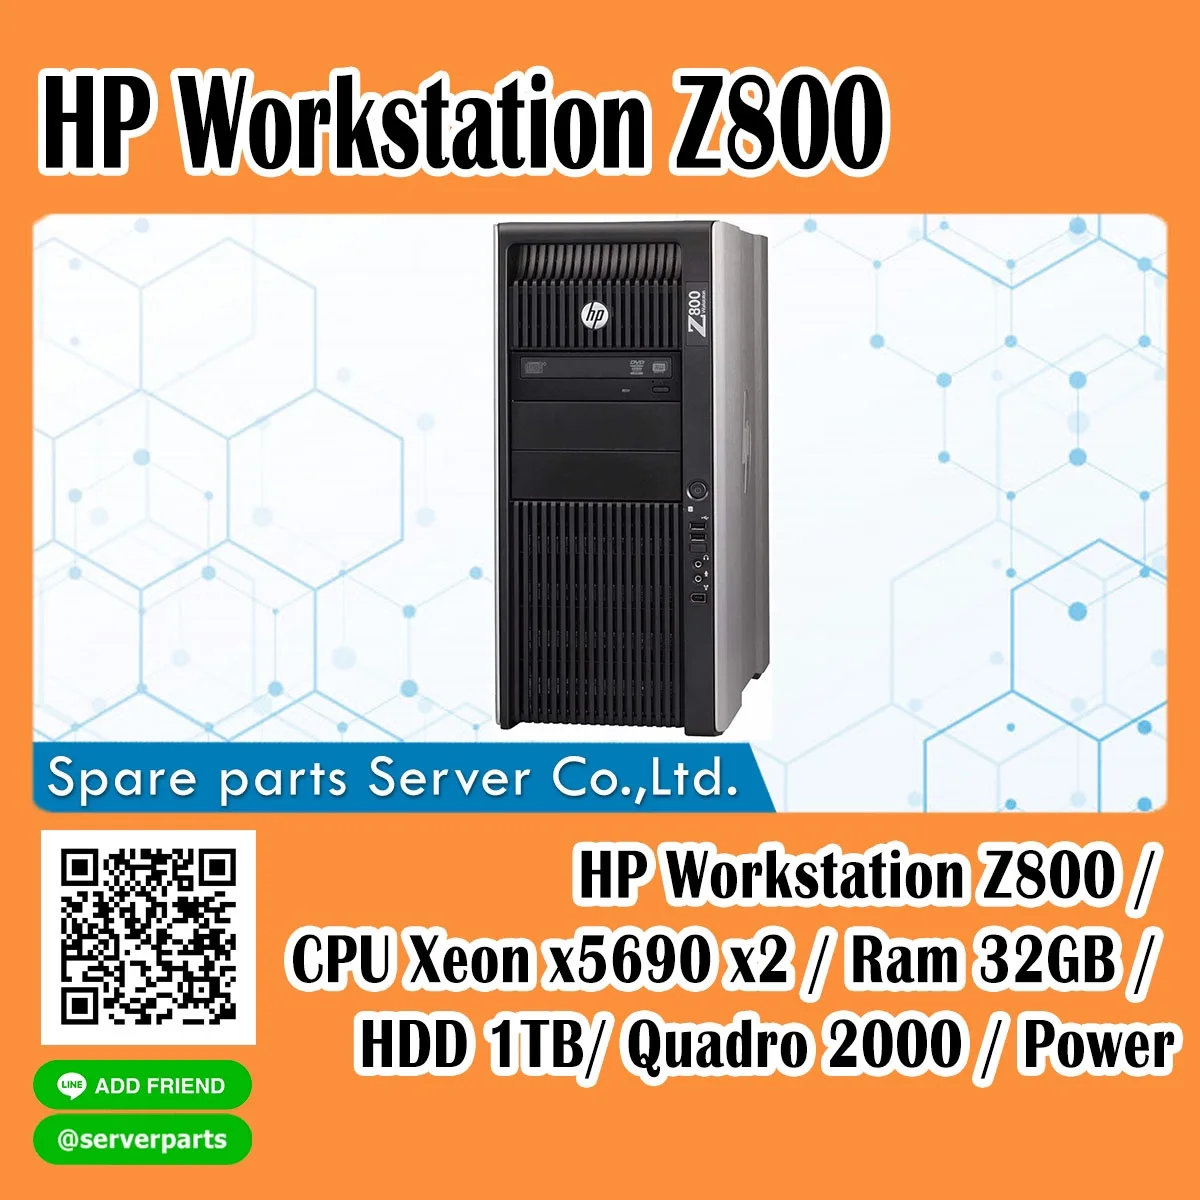 HP Workstation Z800 / CPU Xeon x5690 x2 / Ram 32GB / HDD 1TB/ Quadro 2000 / Power